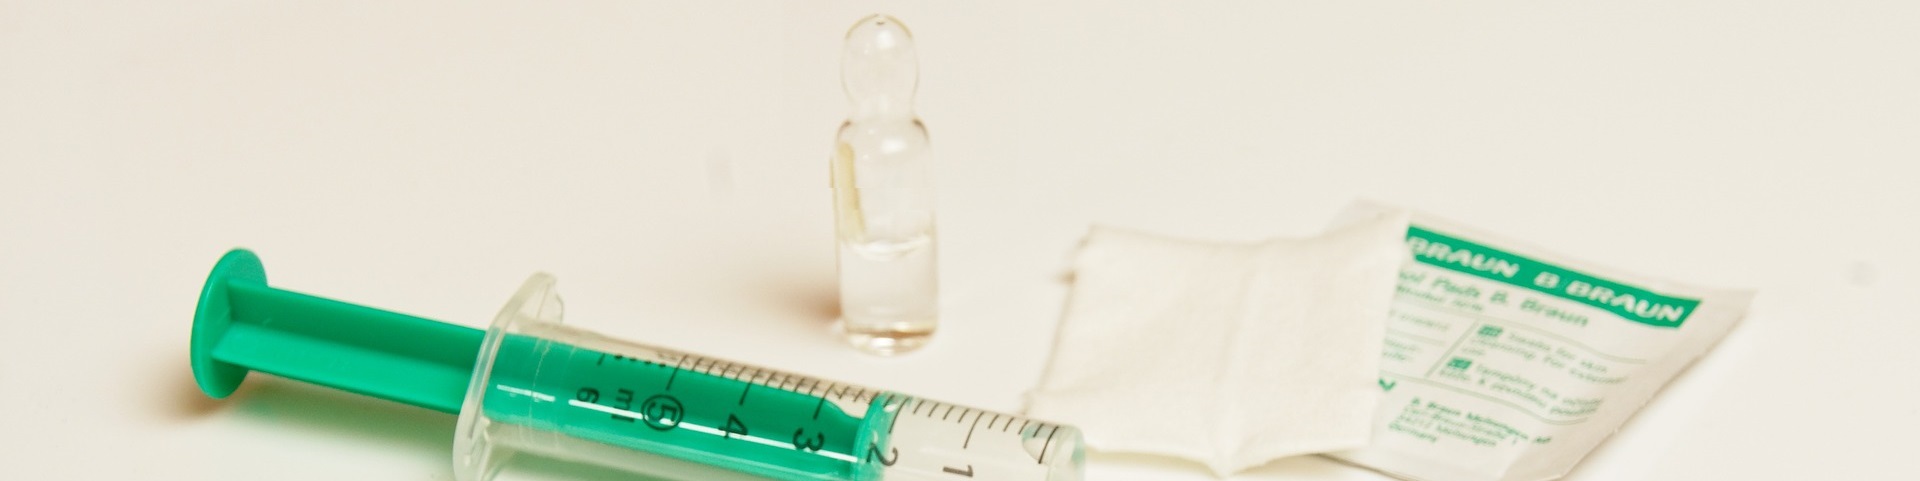 Syringe and Drugs Used in Euthanasia